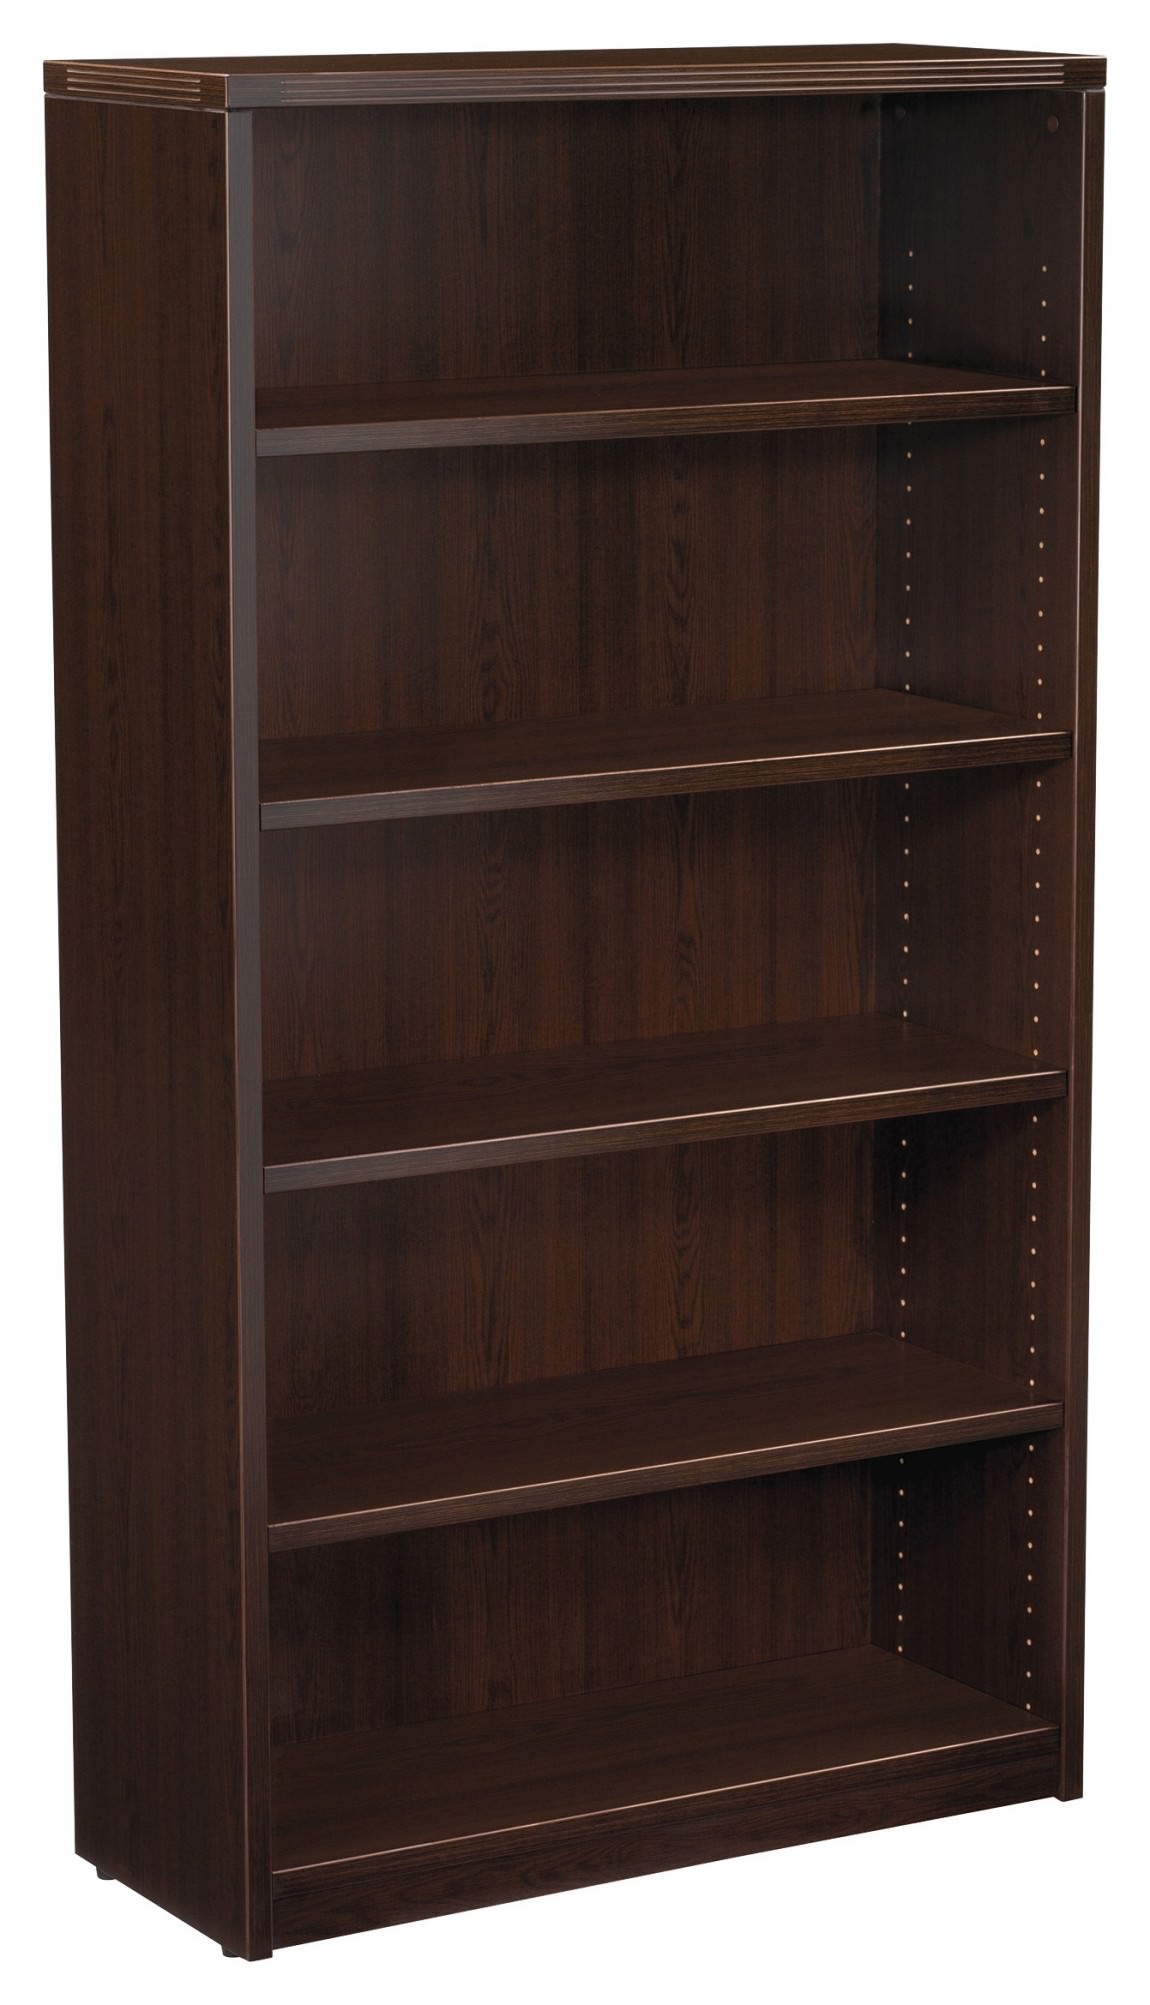 5 Shelf Bookcase - 65 Tall